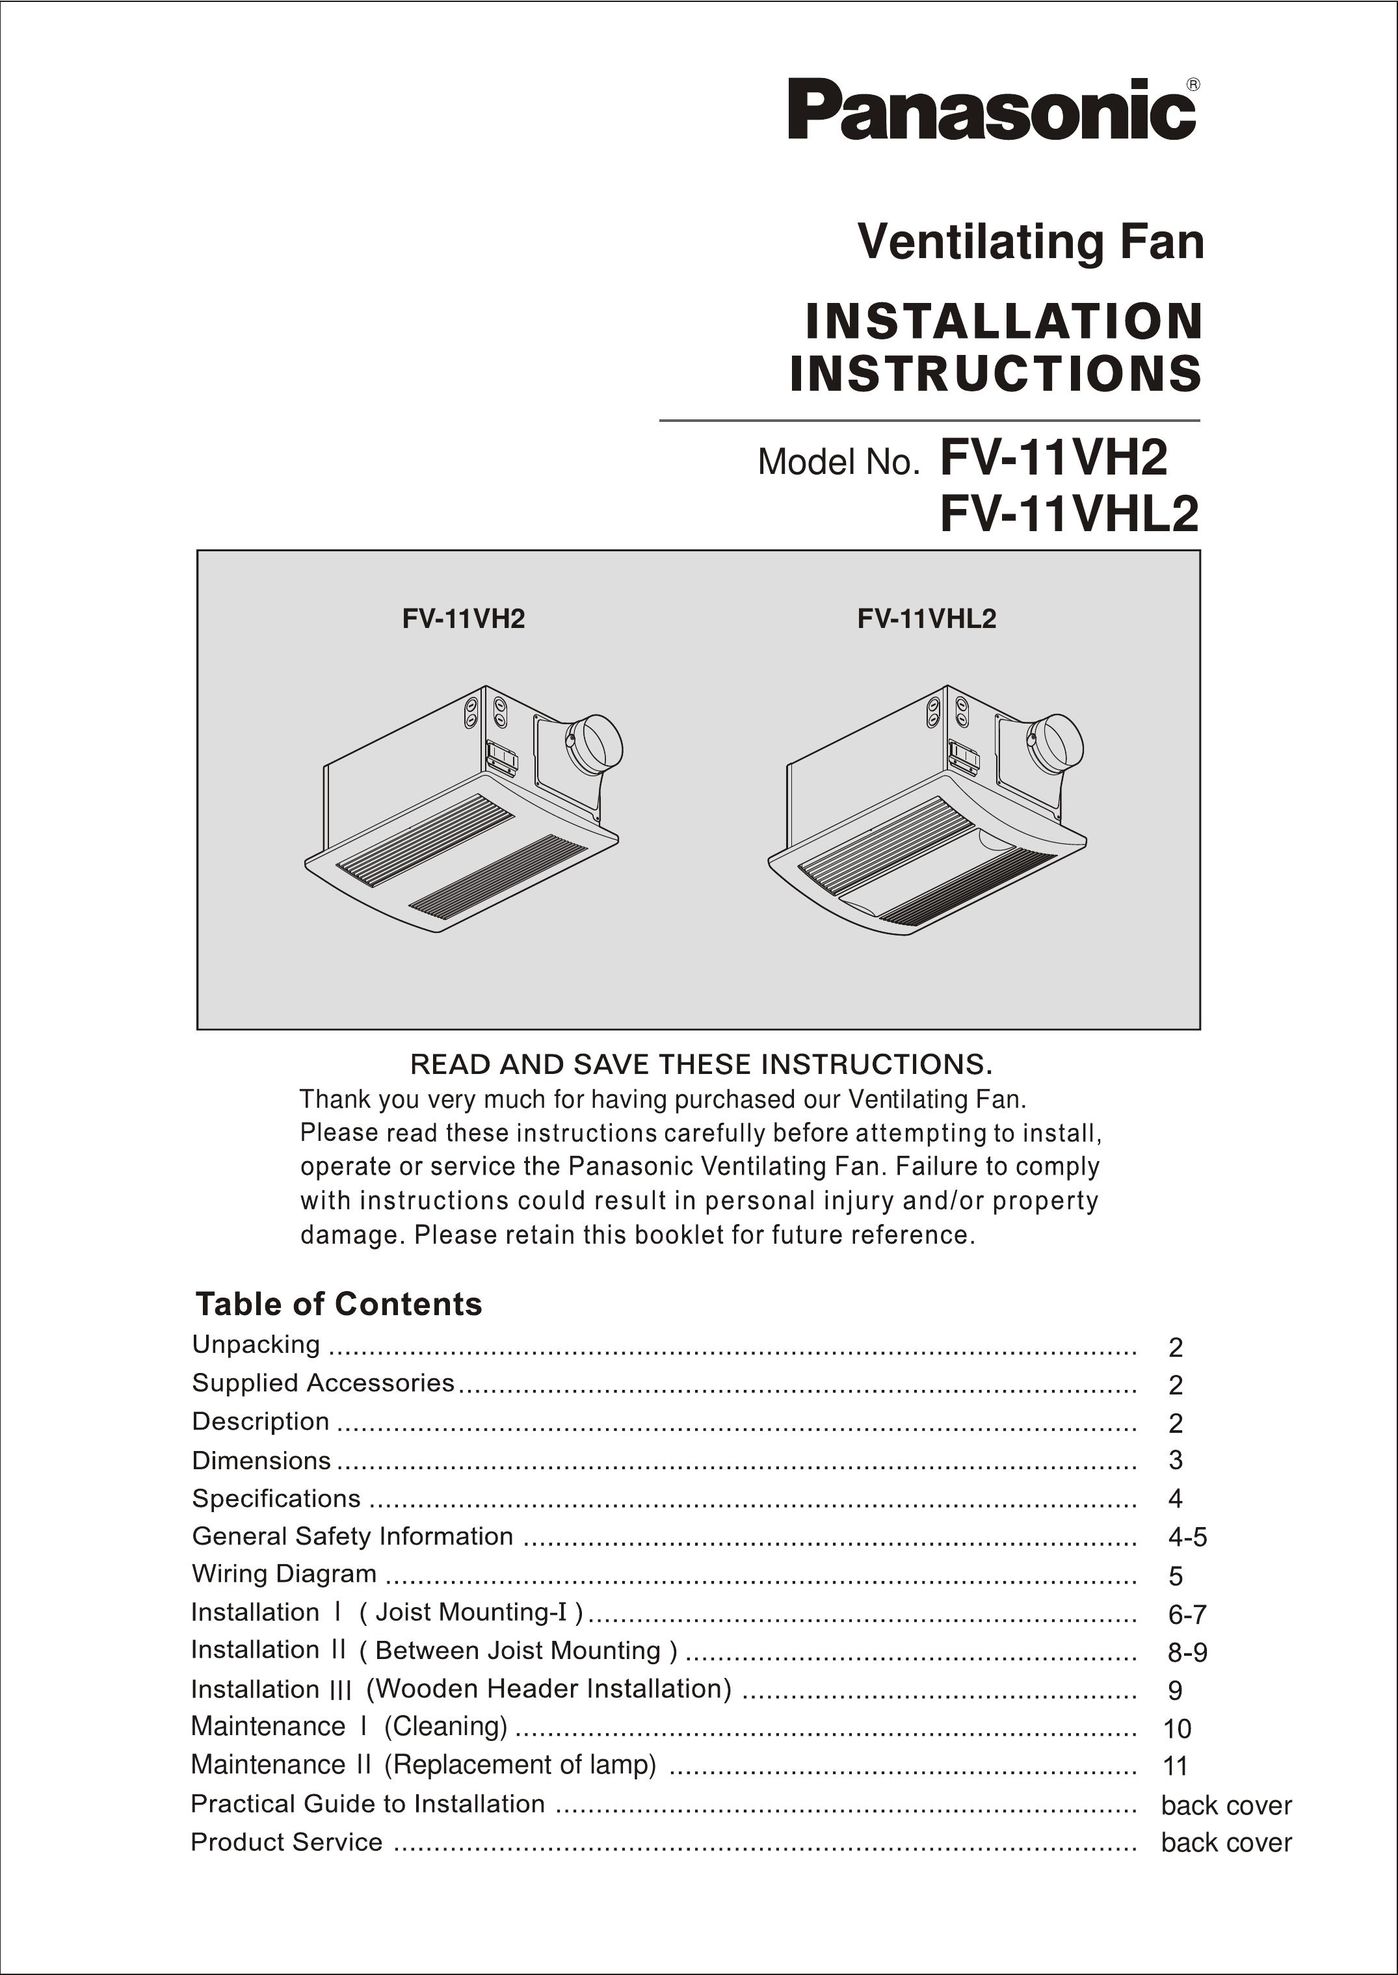 Panasonic FV-11VH2 Dollhouse User Manual